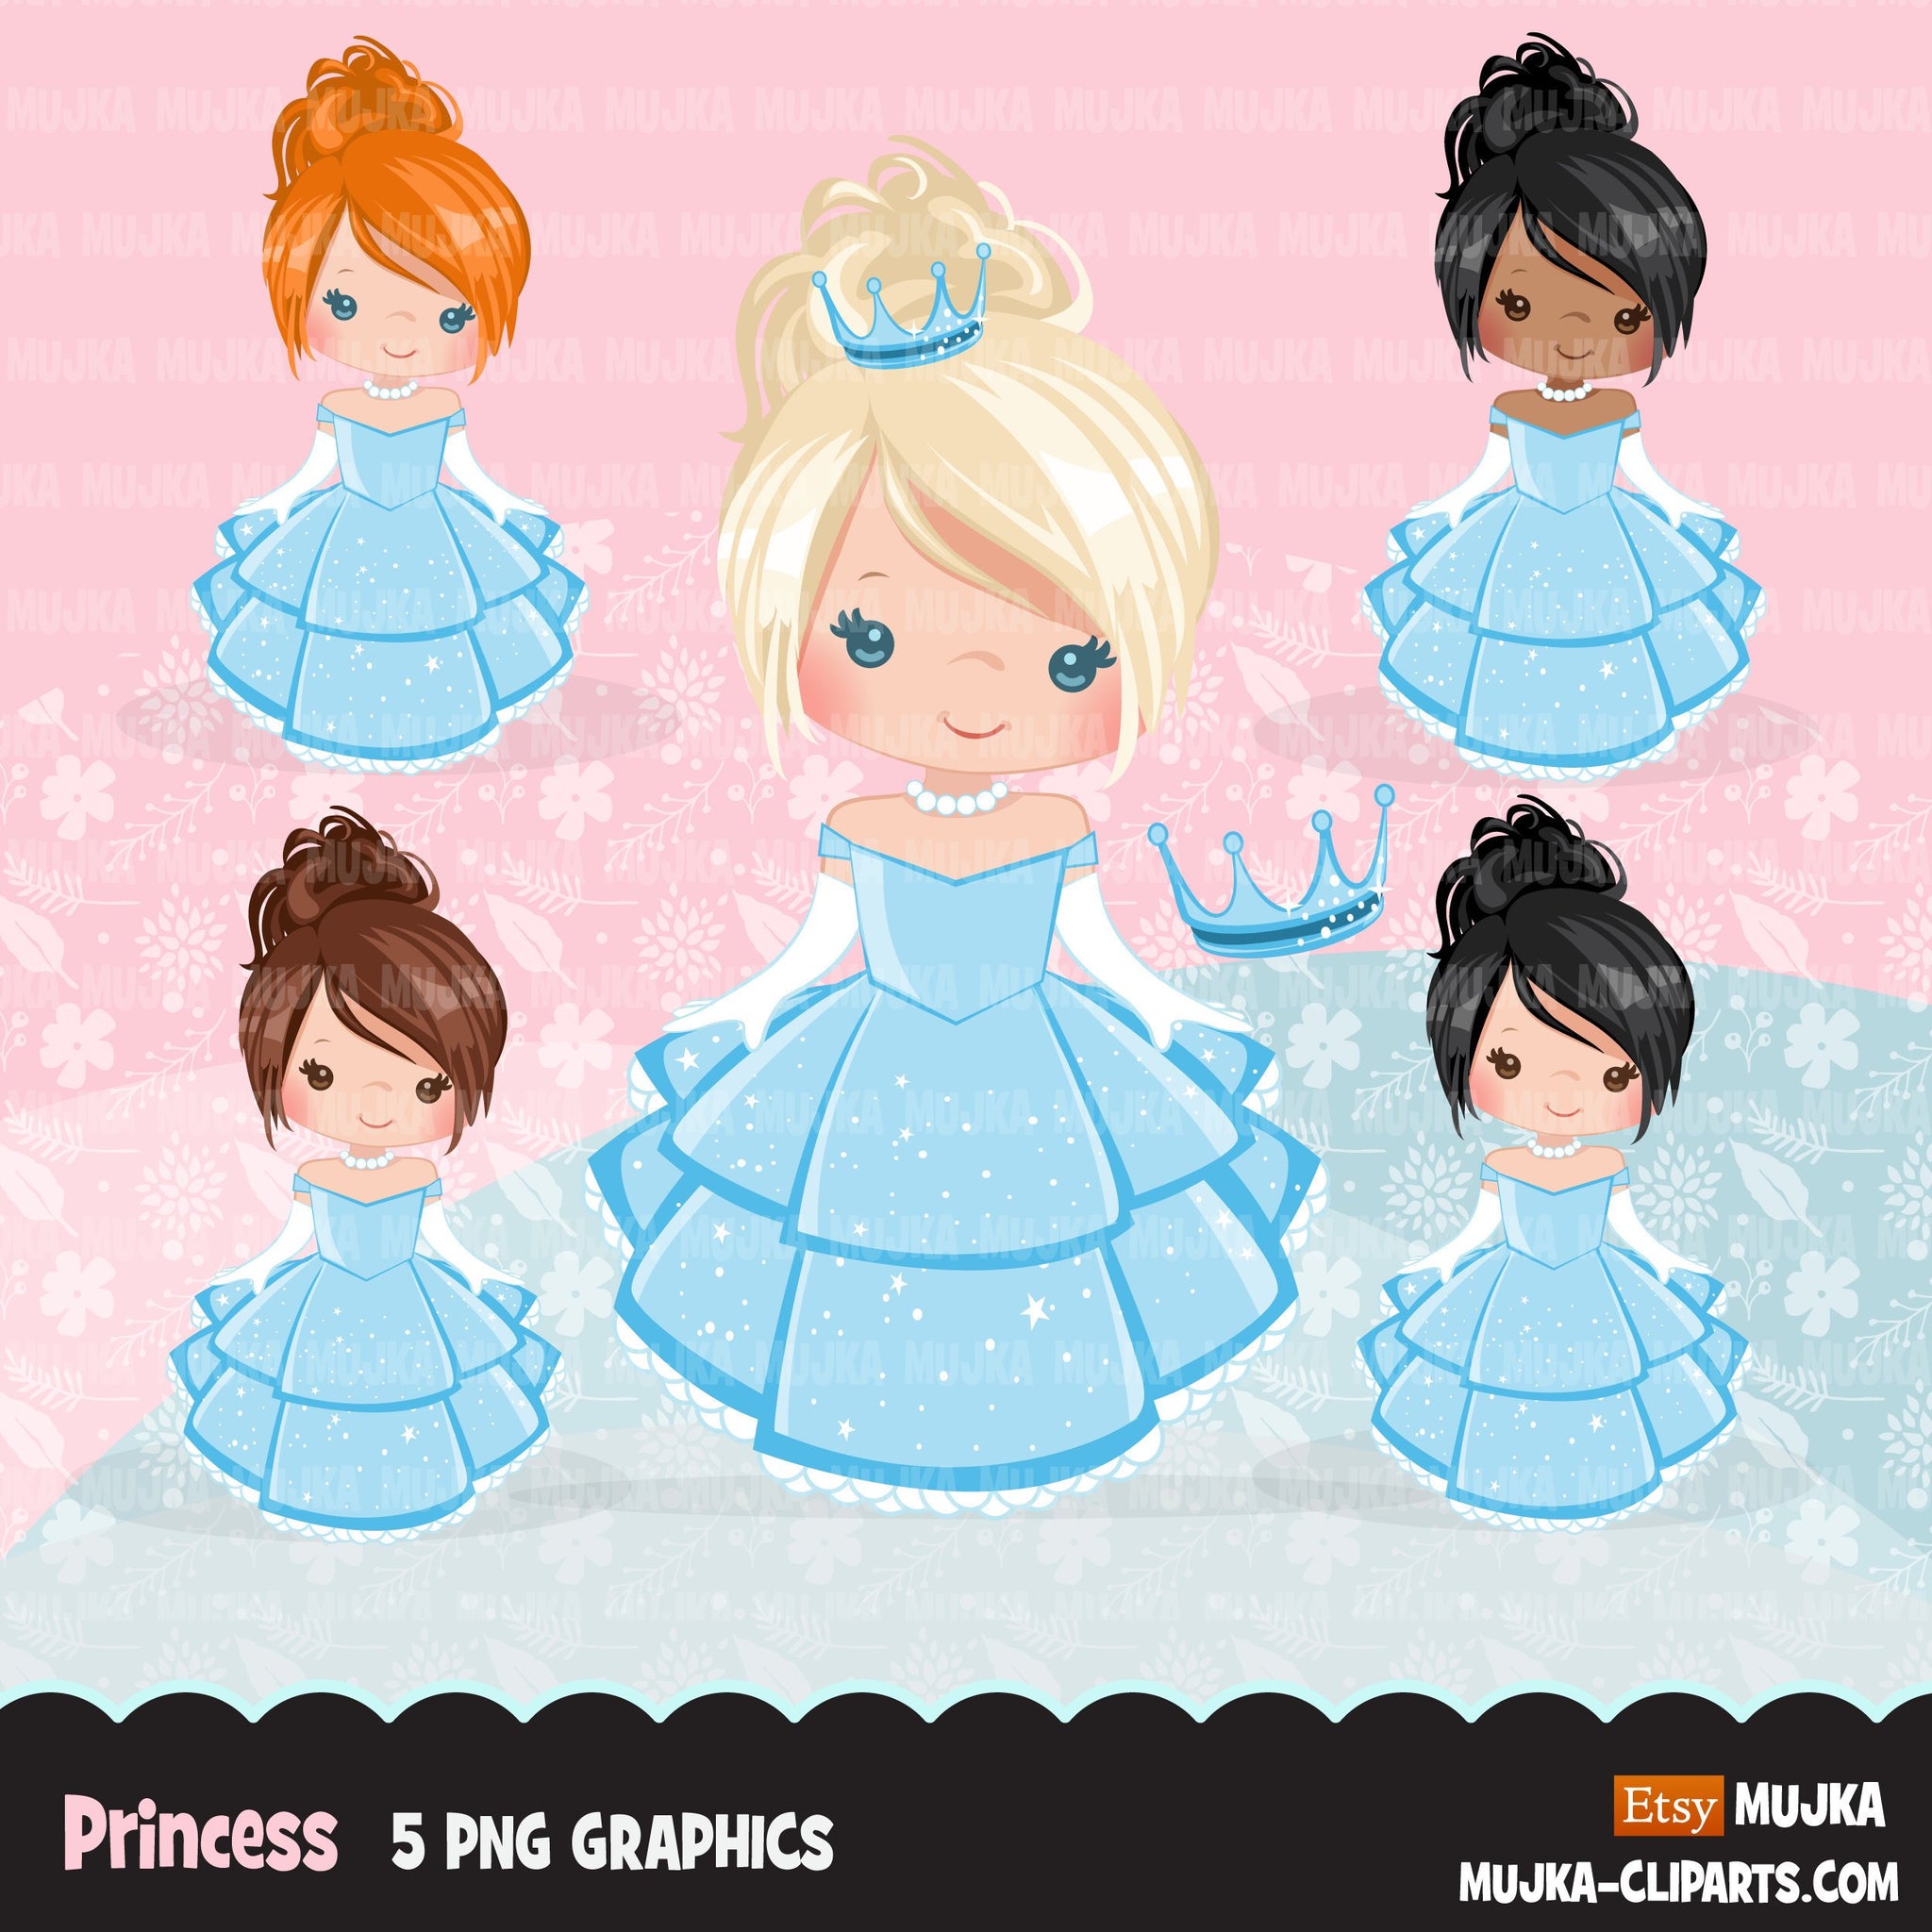 Princess clipart, fairy tale graphics, girls story book, blue princess dress, commercial use clip art